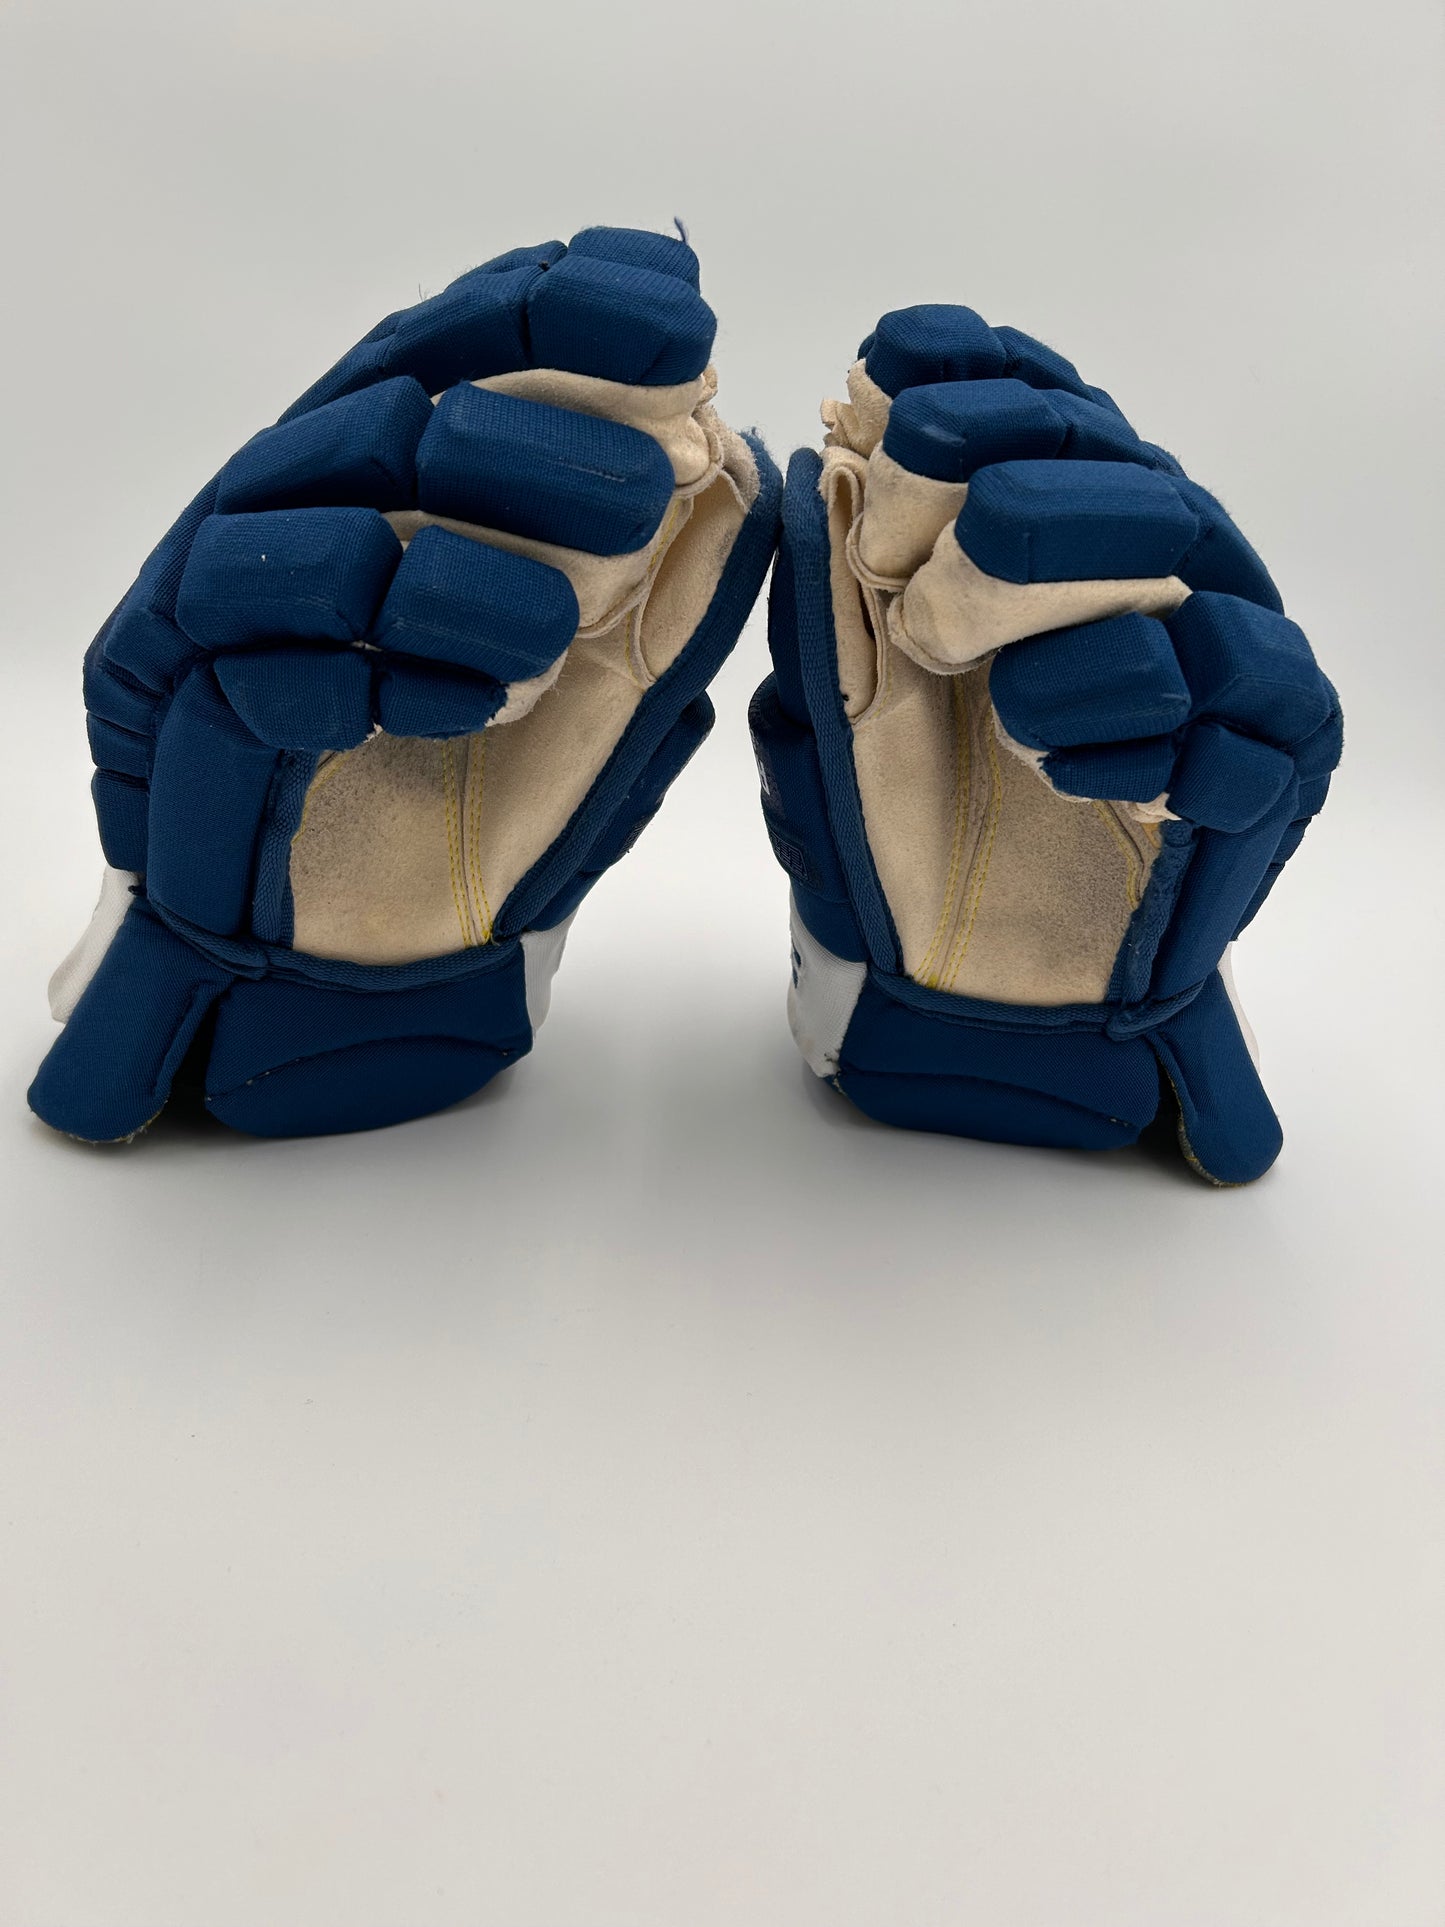 Artturi Lehkonen Colorado Avalanche Game Worn Gloves